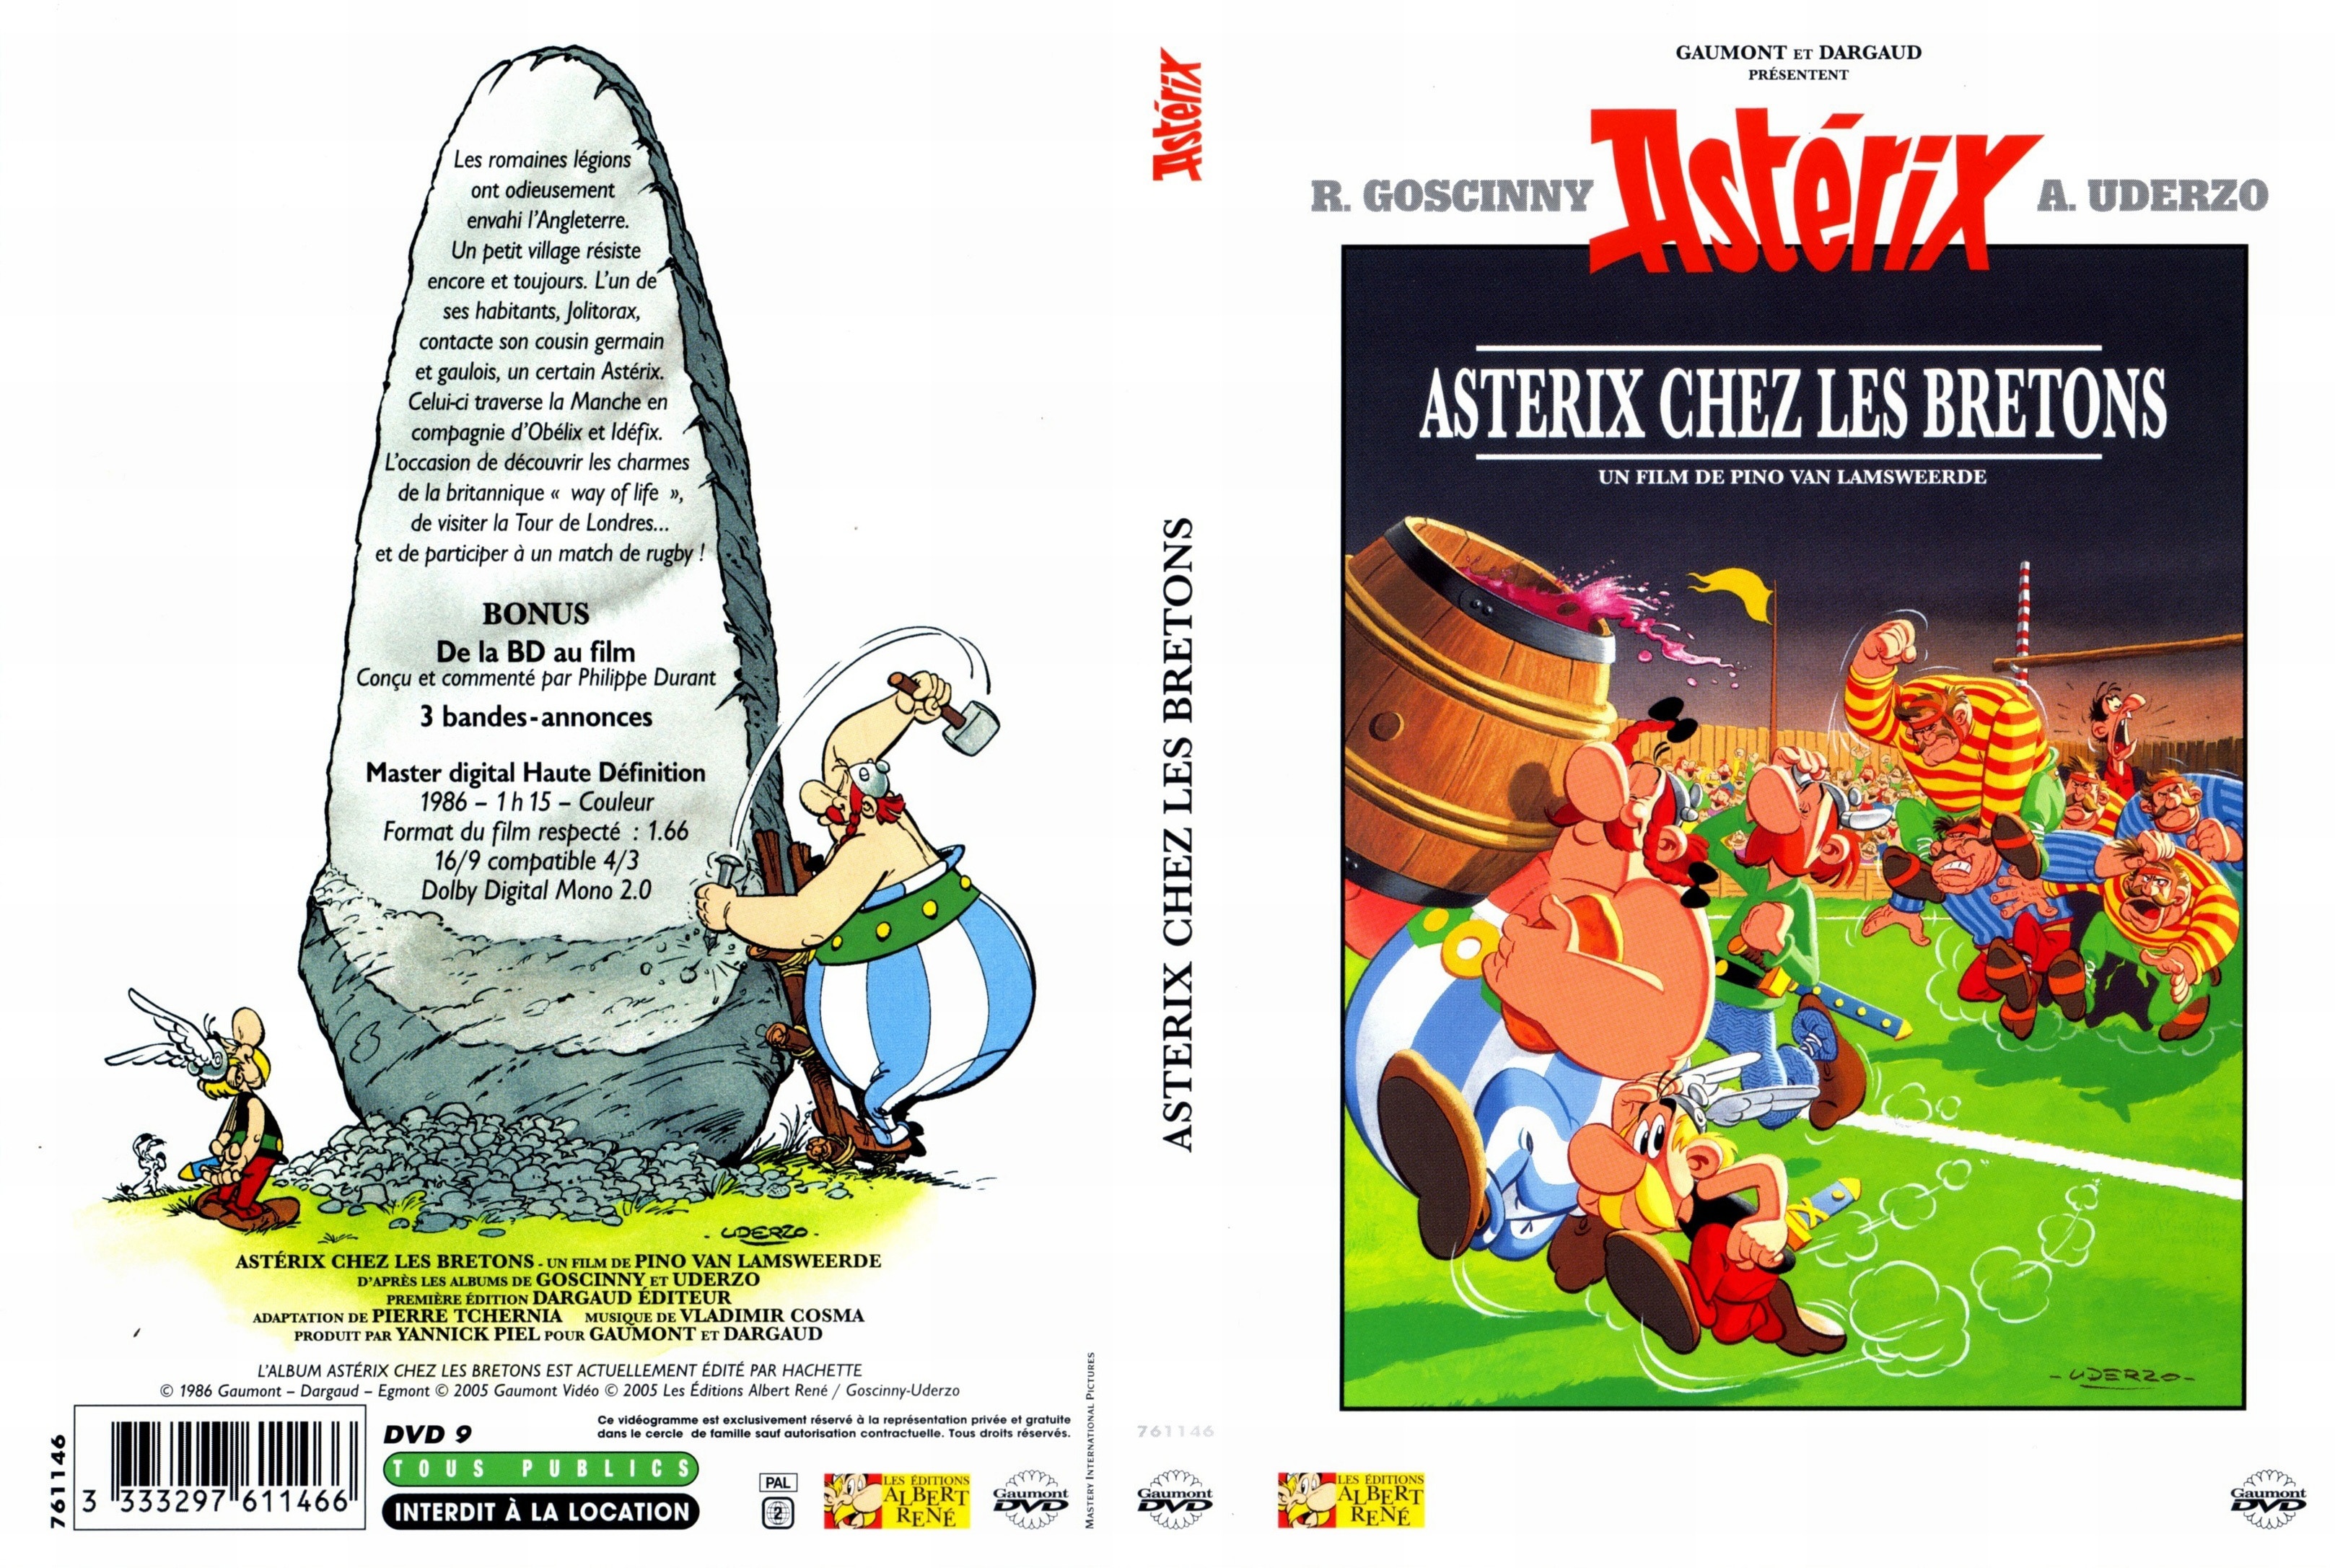 Jaquette DVD Asterix chez les bretons v2